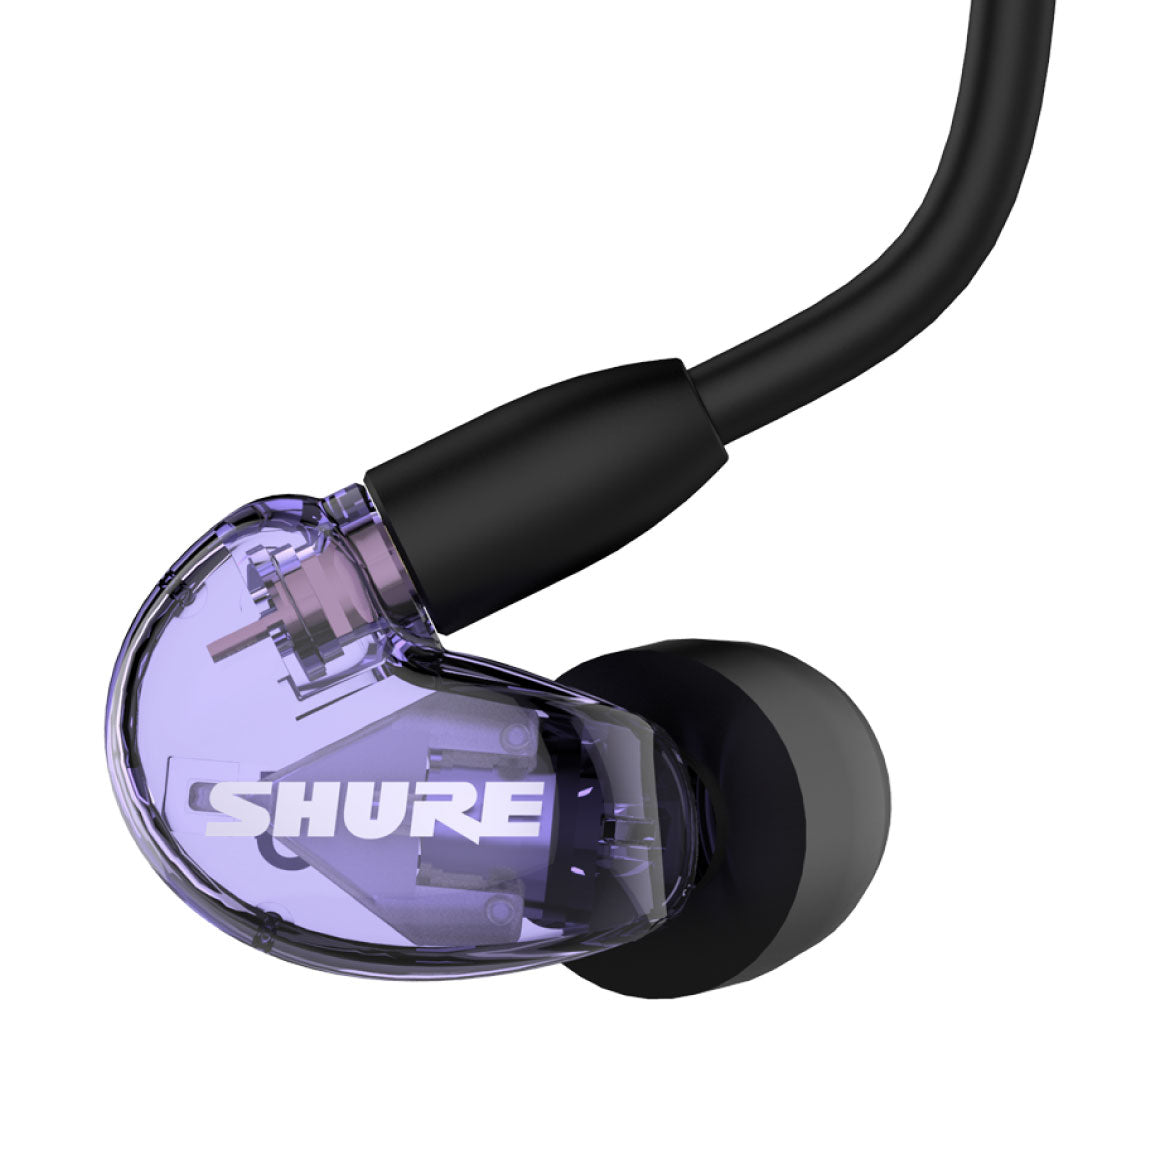 Shure SE215 Pro Sound-Isolating Earphones